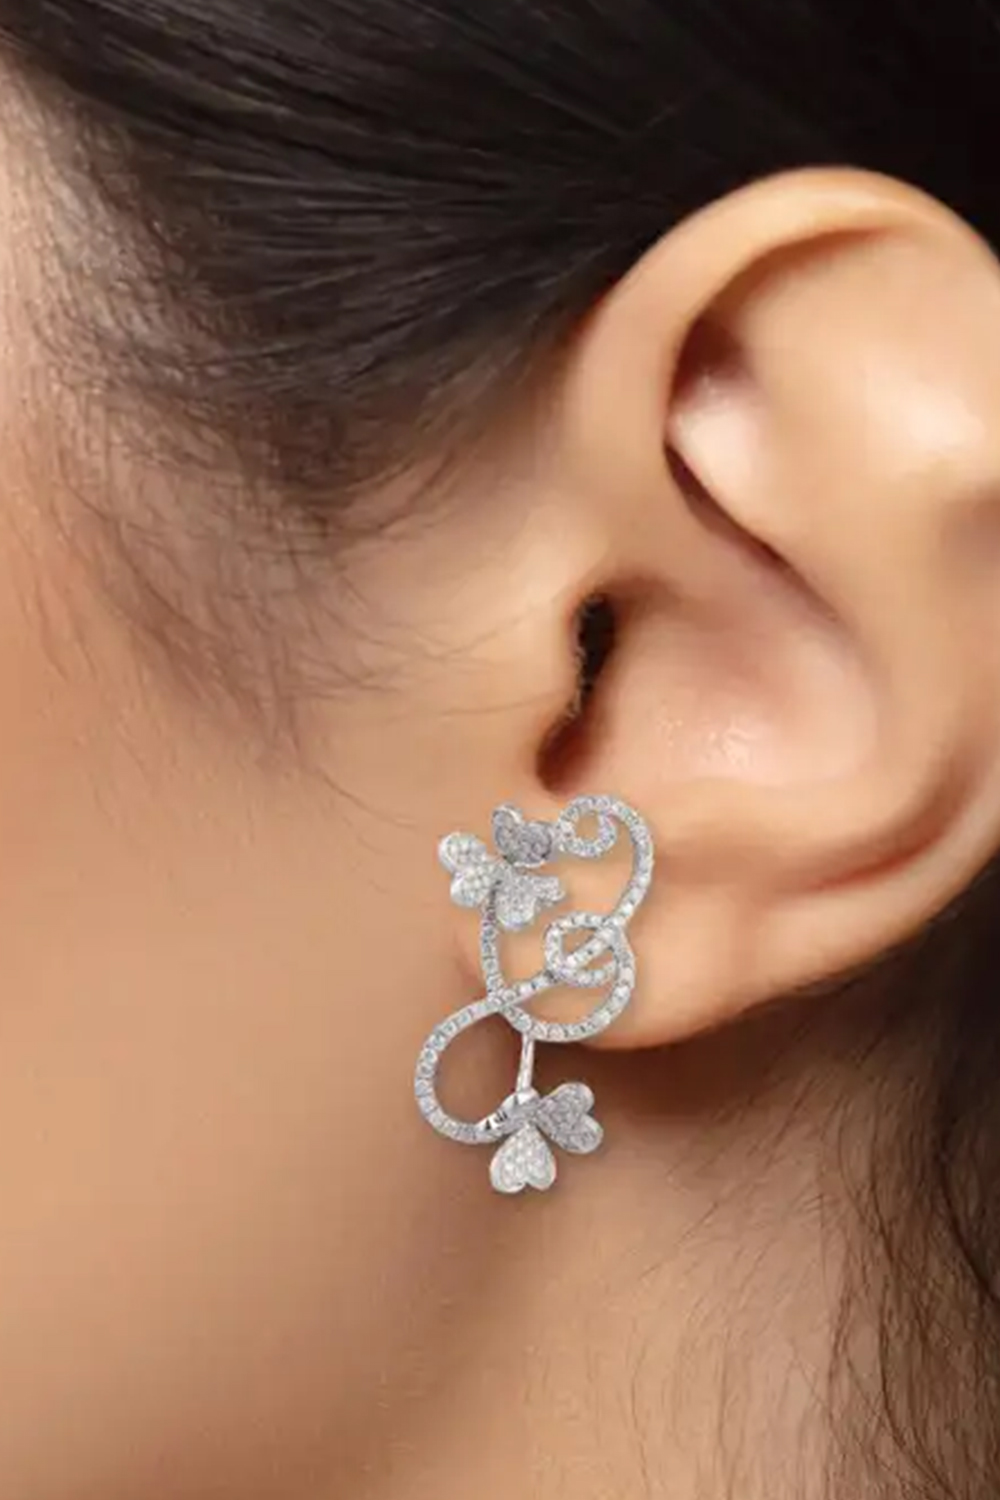 18k gold 1.39cts Diamond Earring